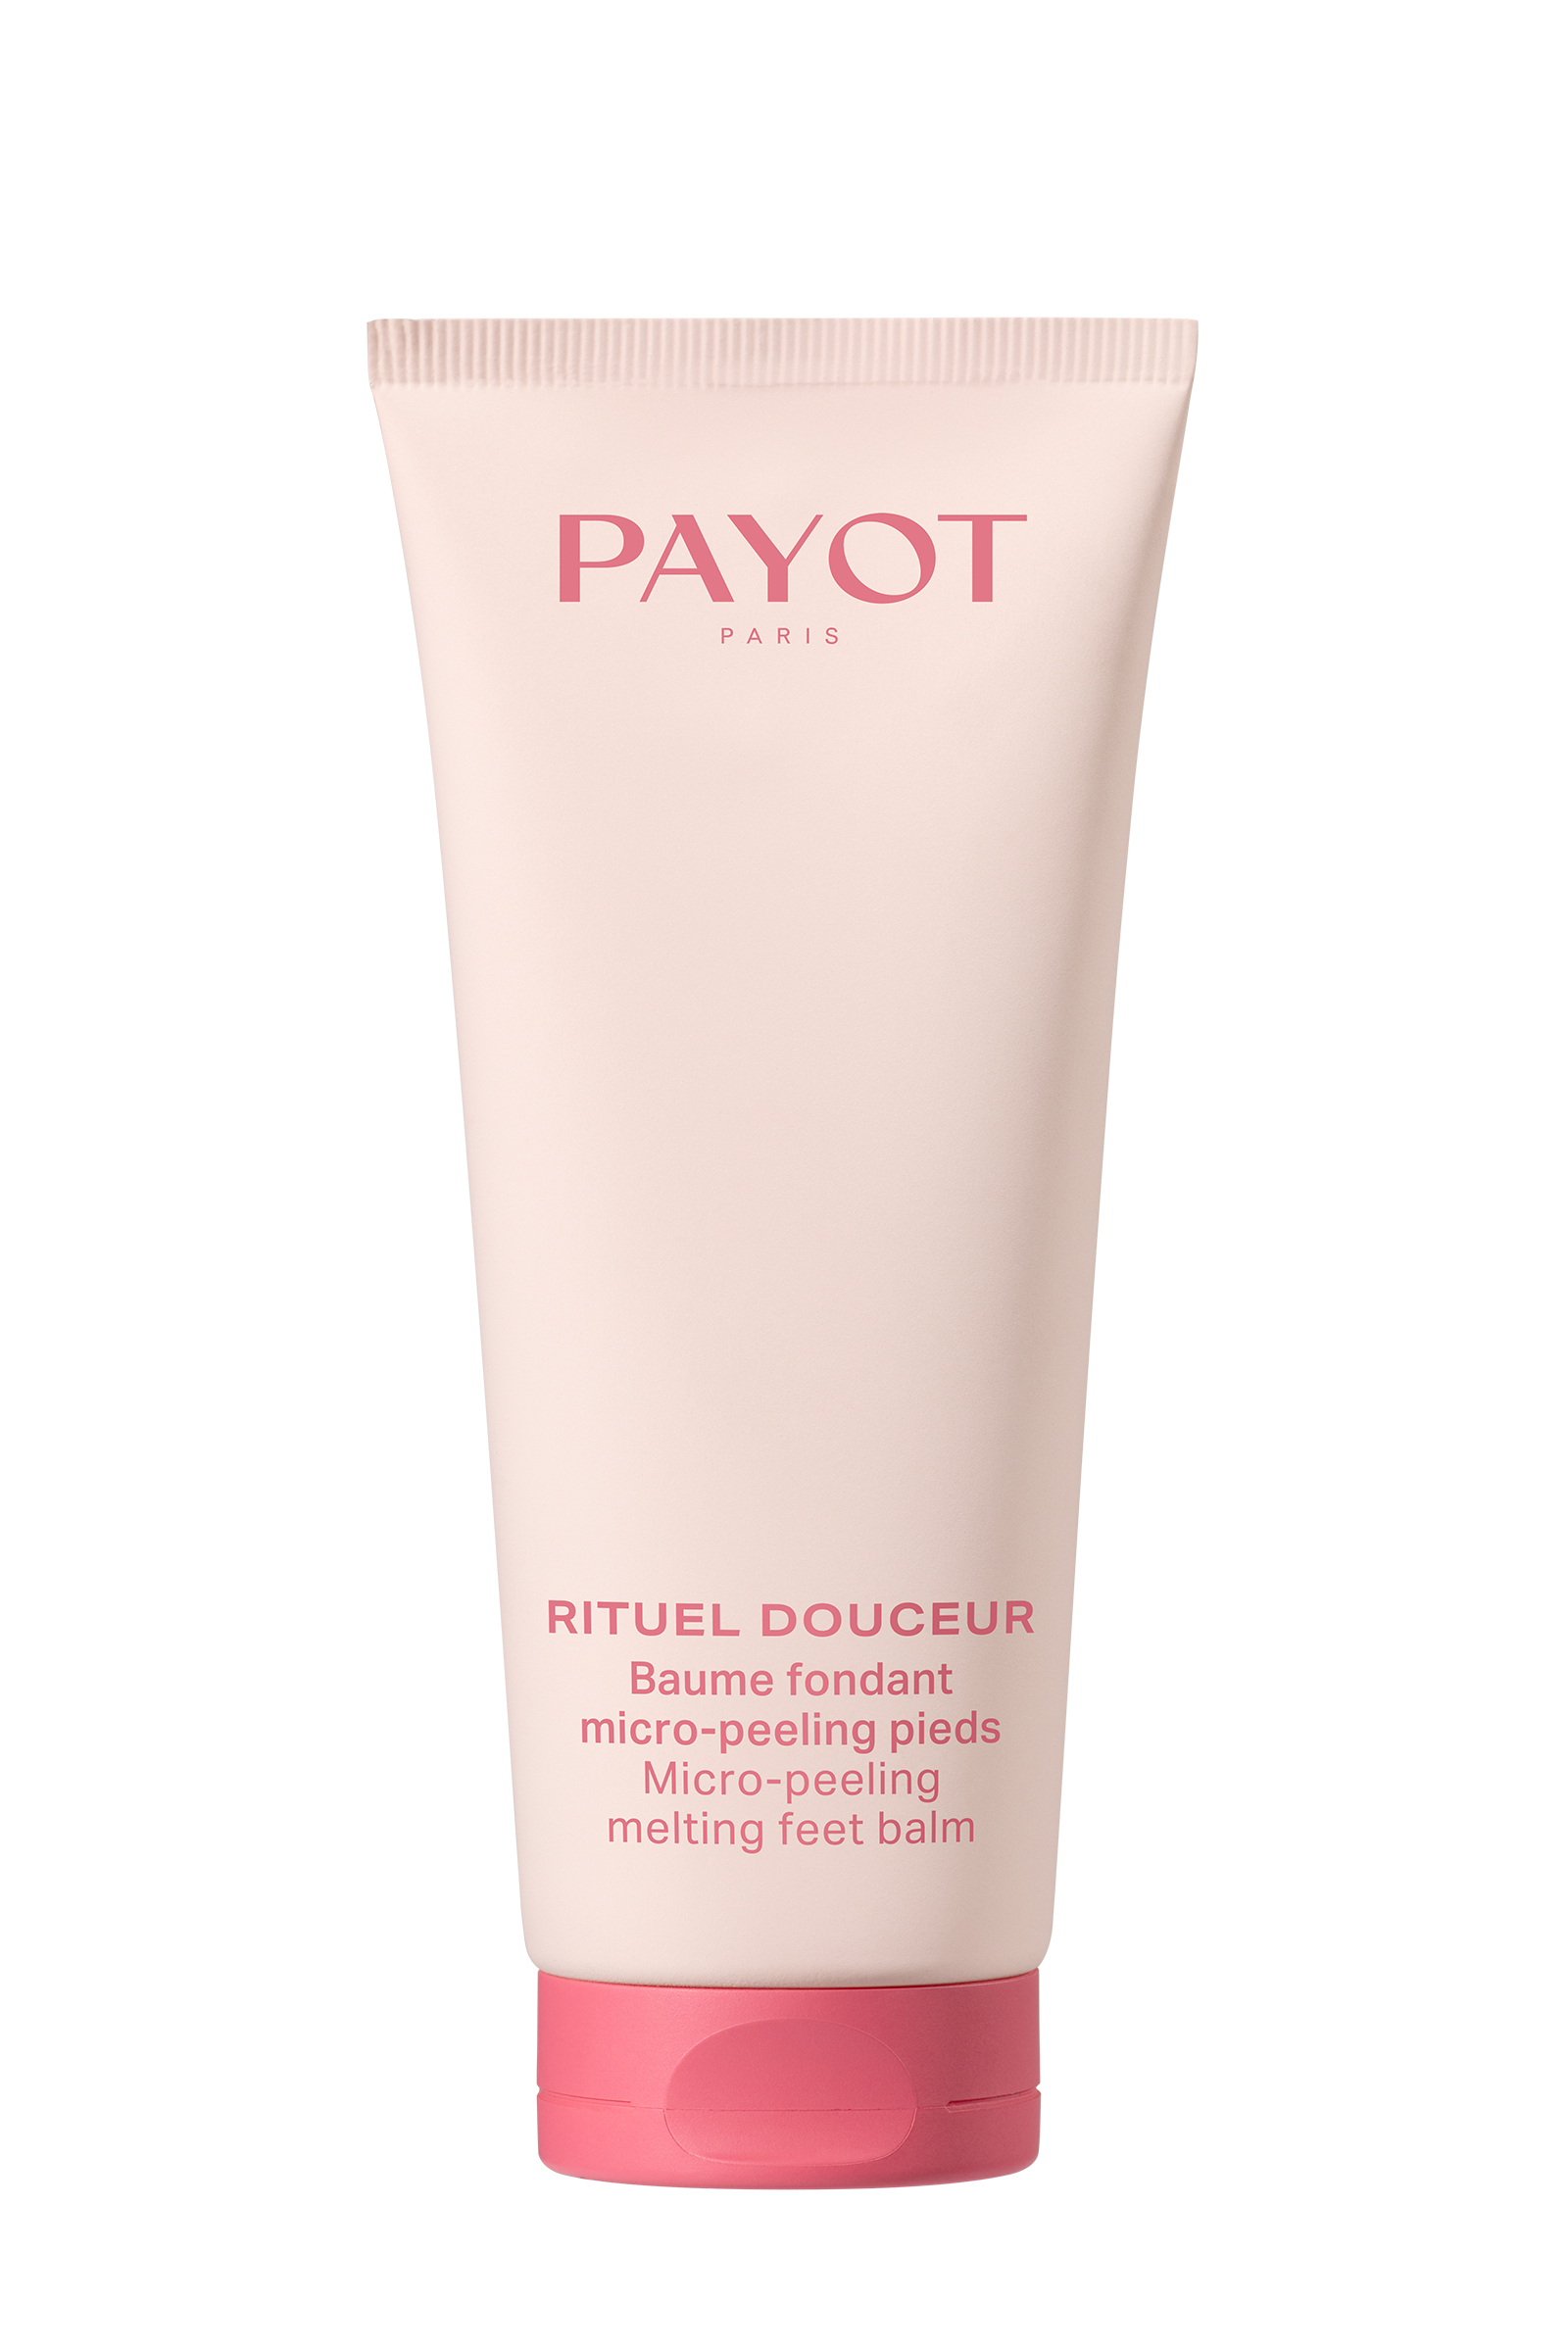 Payot Rituel Douceur Baume Fondant Micro-Peeling Pieds 100 ml